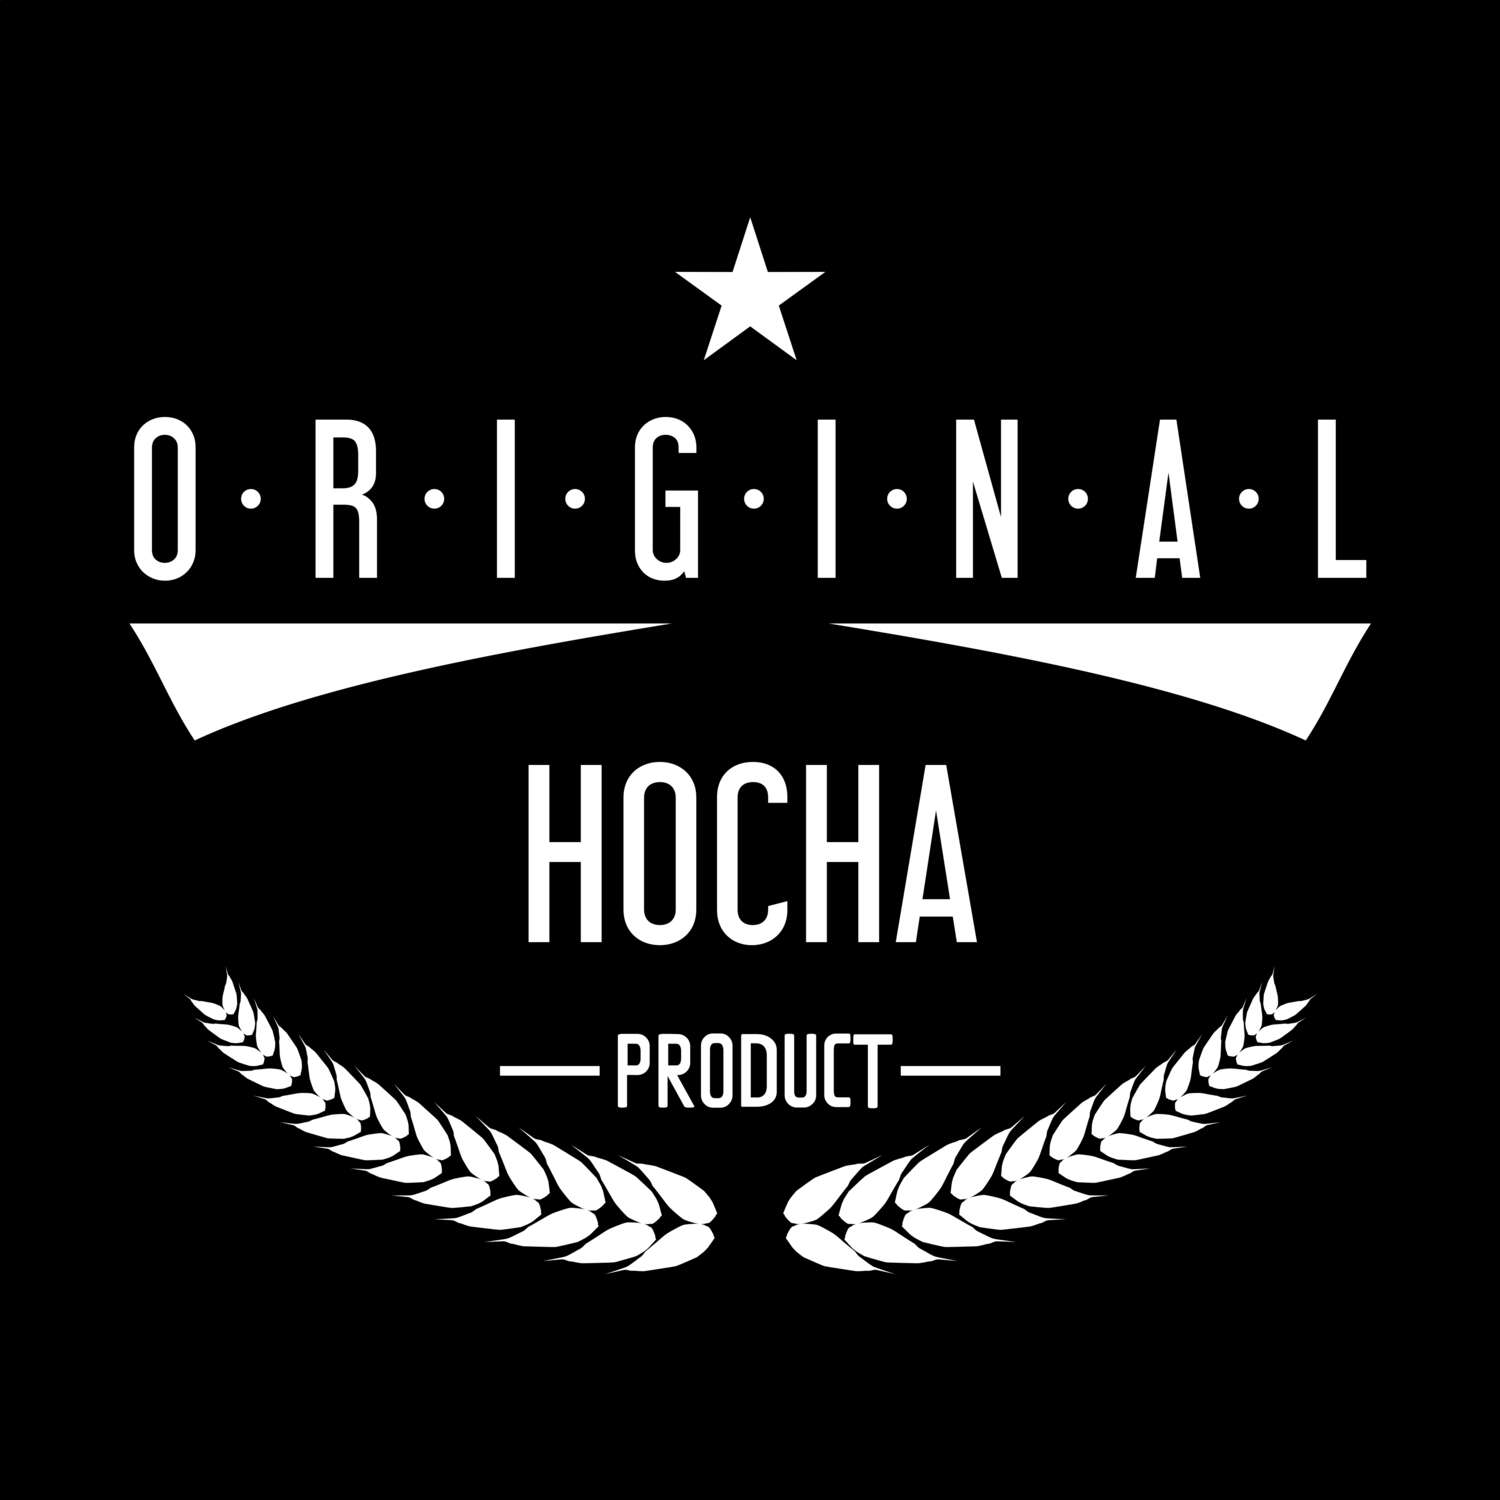 Hocha T-Shirt »Original Product«